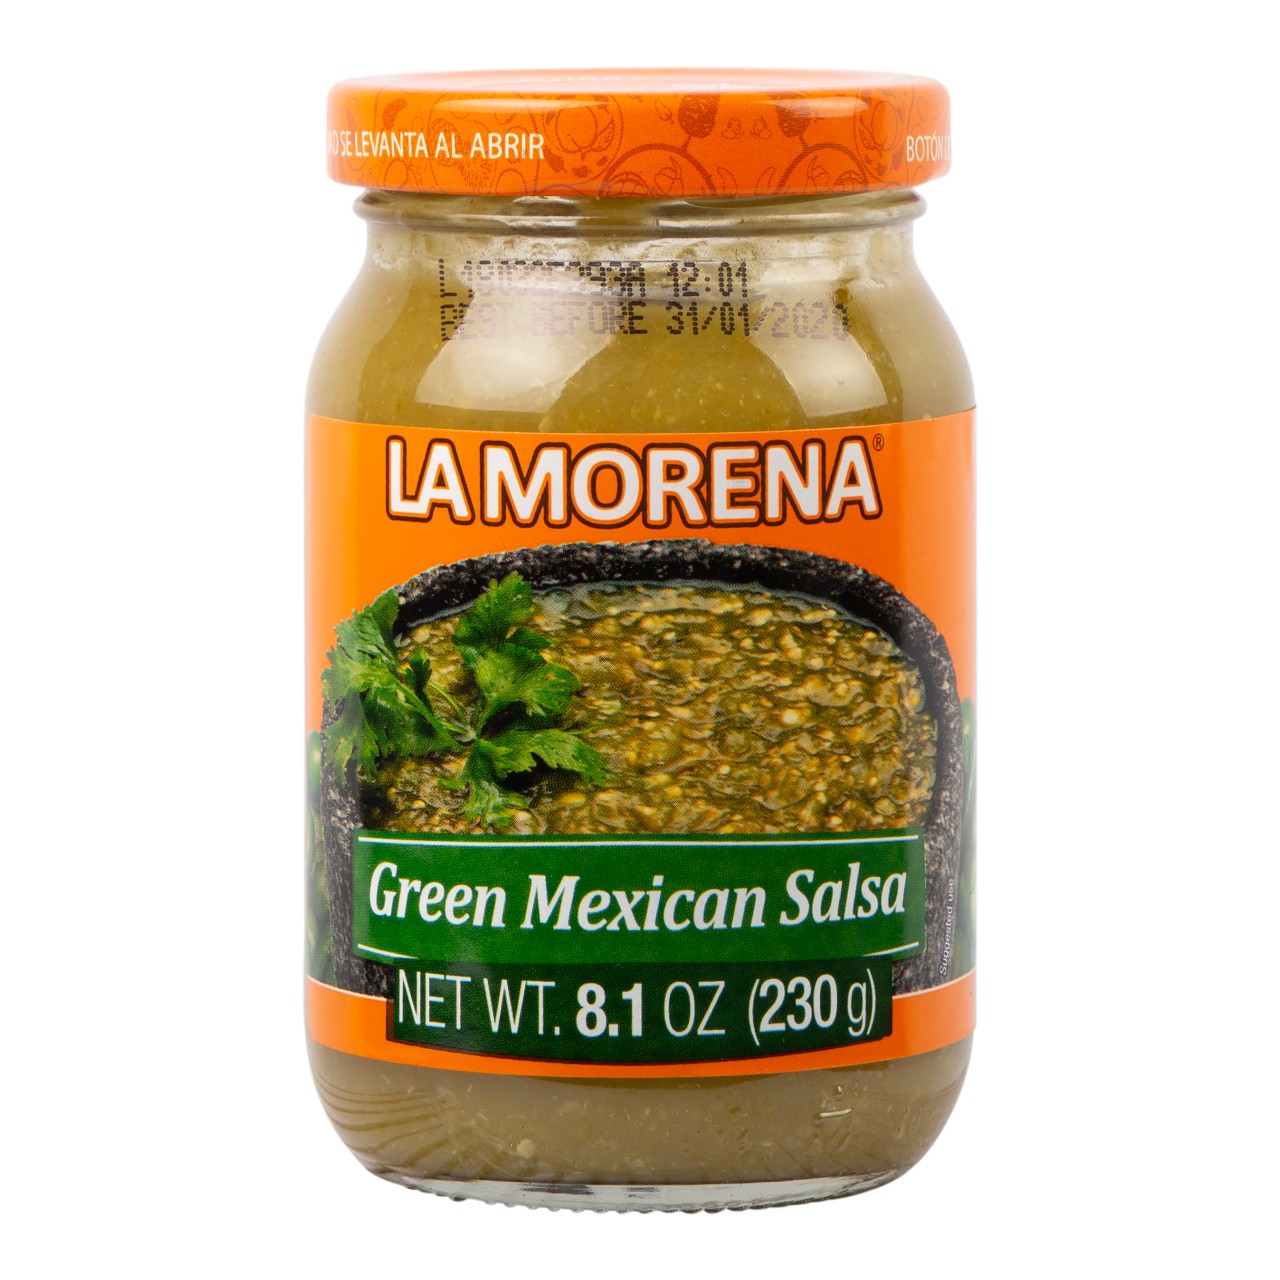 Green Mexican salsa